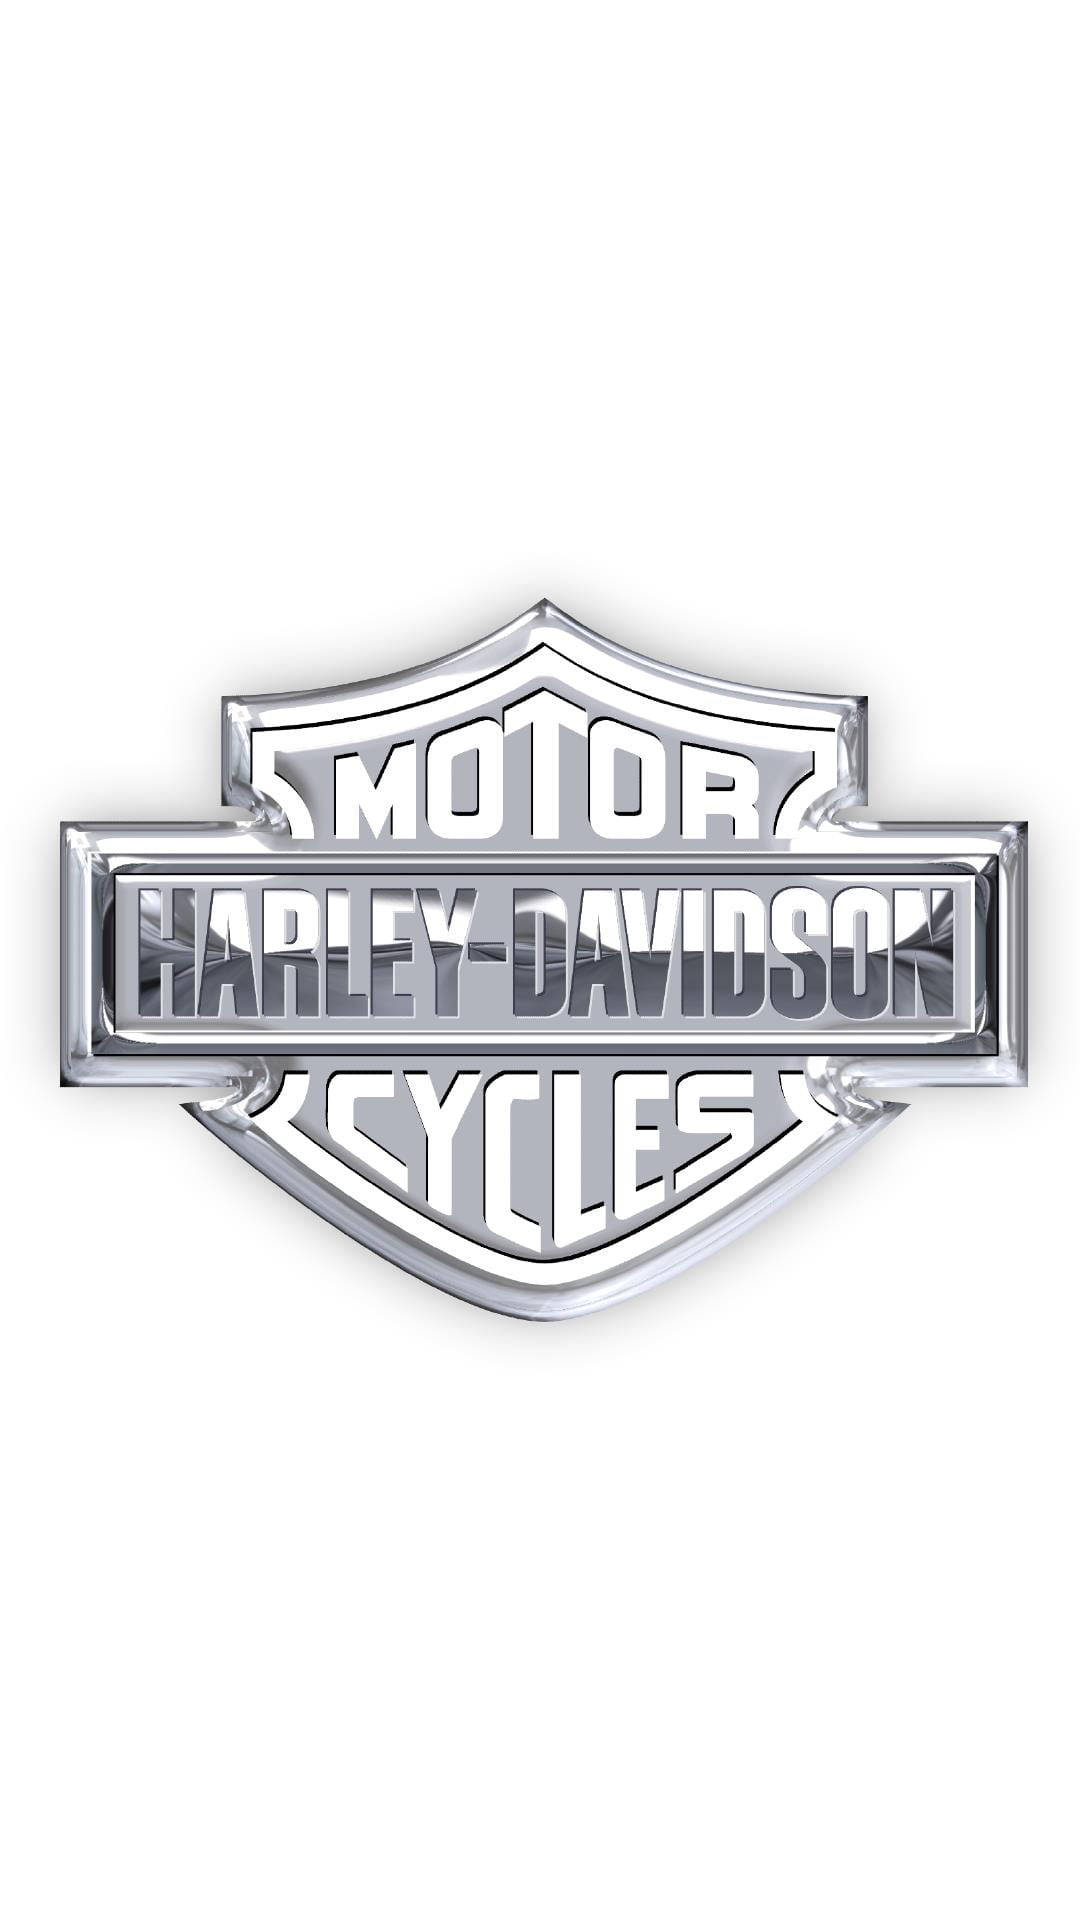 Silver Harley Davidson Mobile Wallpaper